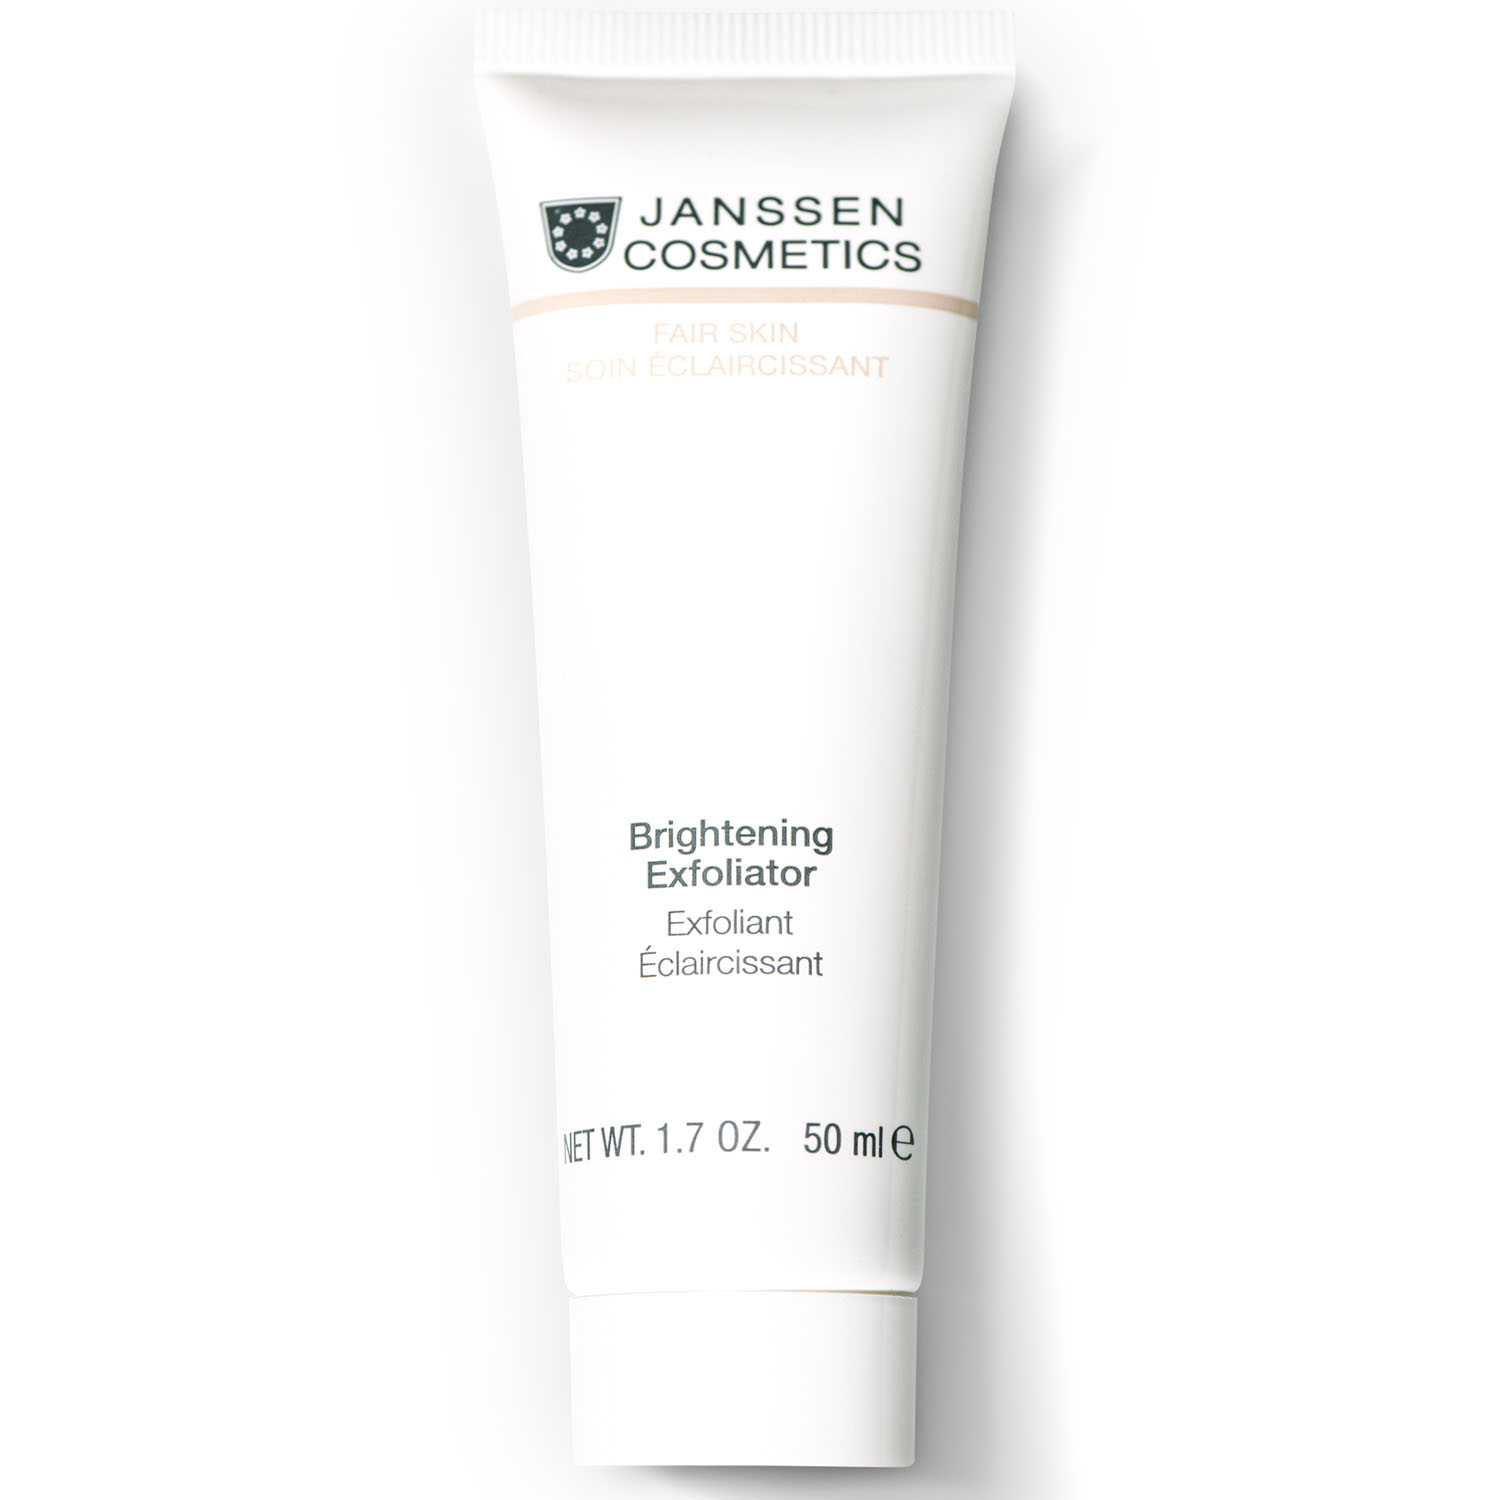 Janssen Cosmetics Пилинг-крем для выравнивания цвета лица Brightening Exfoliator, 50 мл (Janssen Cosmetics, Fair Skin)